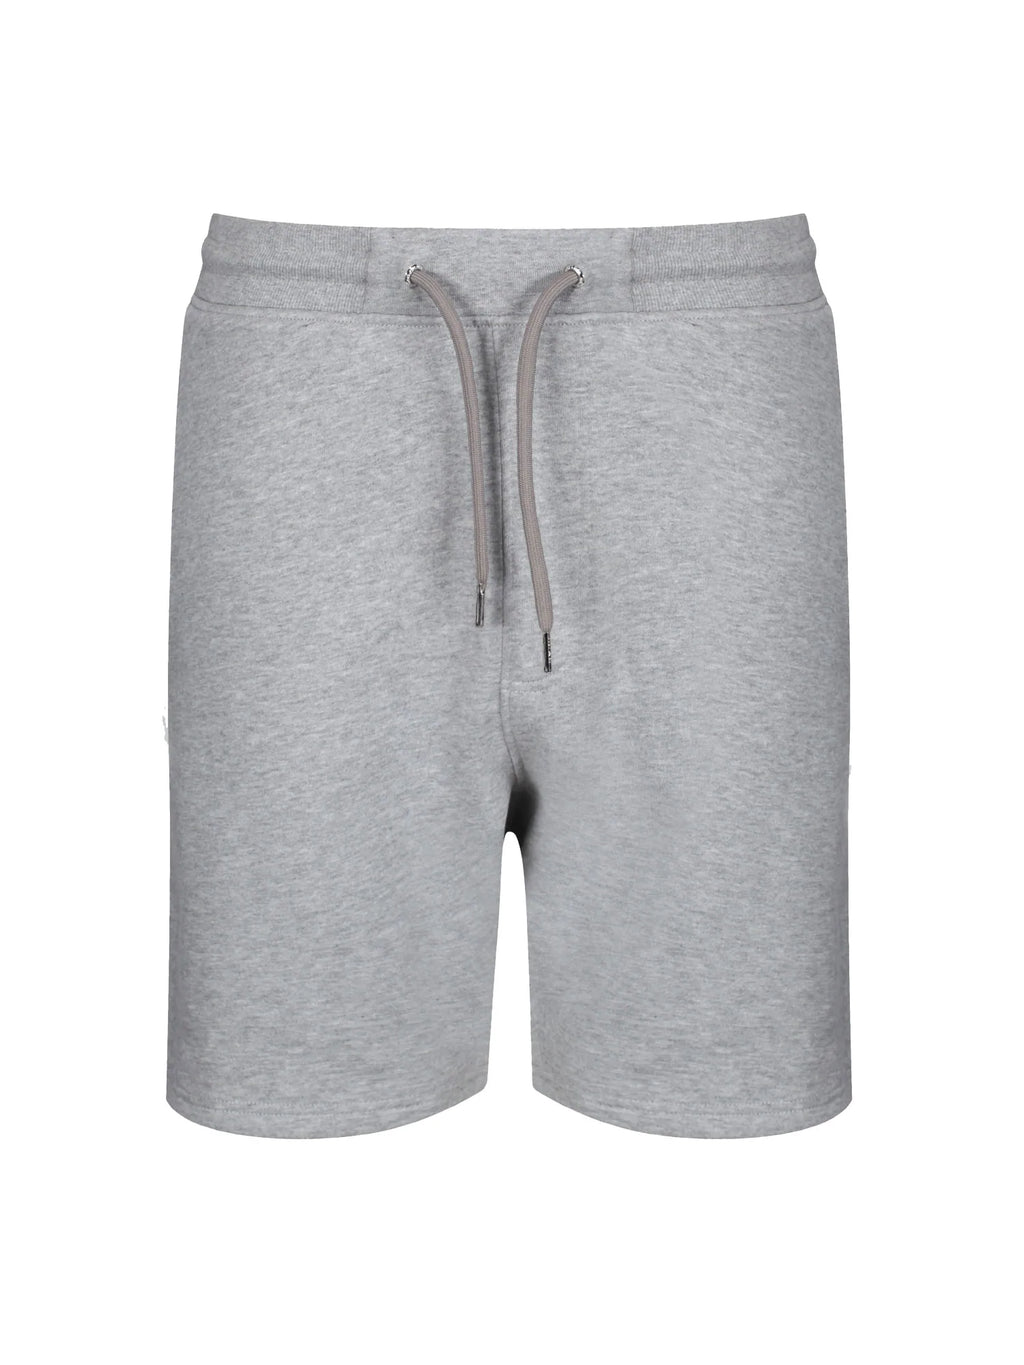 Luke Amsterdam 2 Sweat Shorts Marl Grey - Raw Menswear